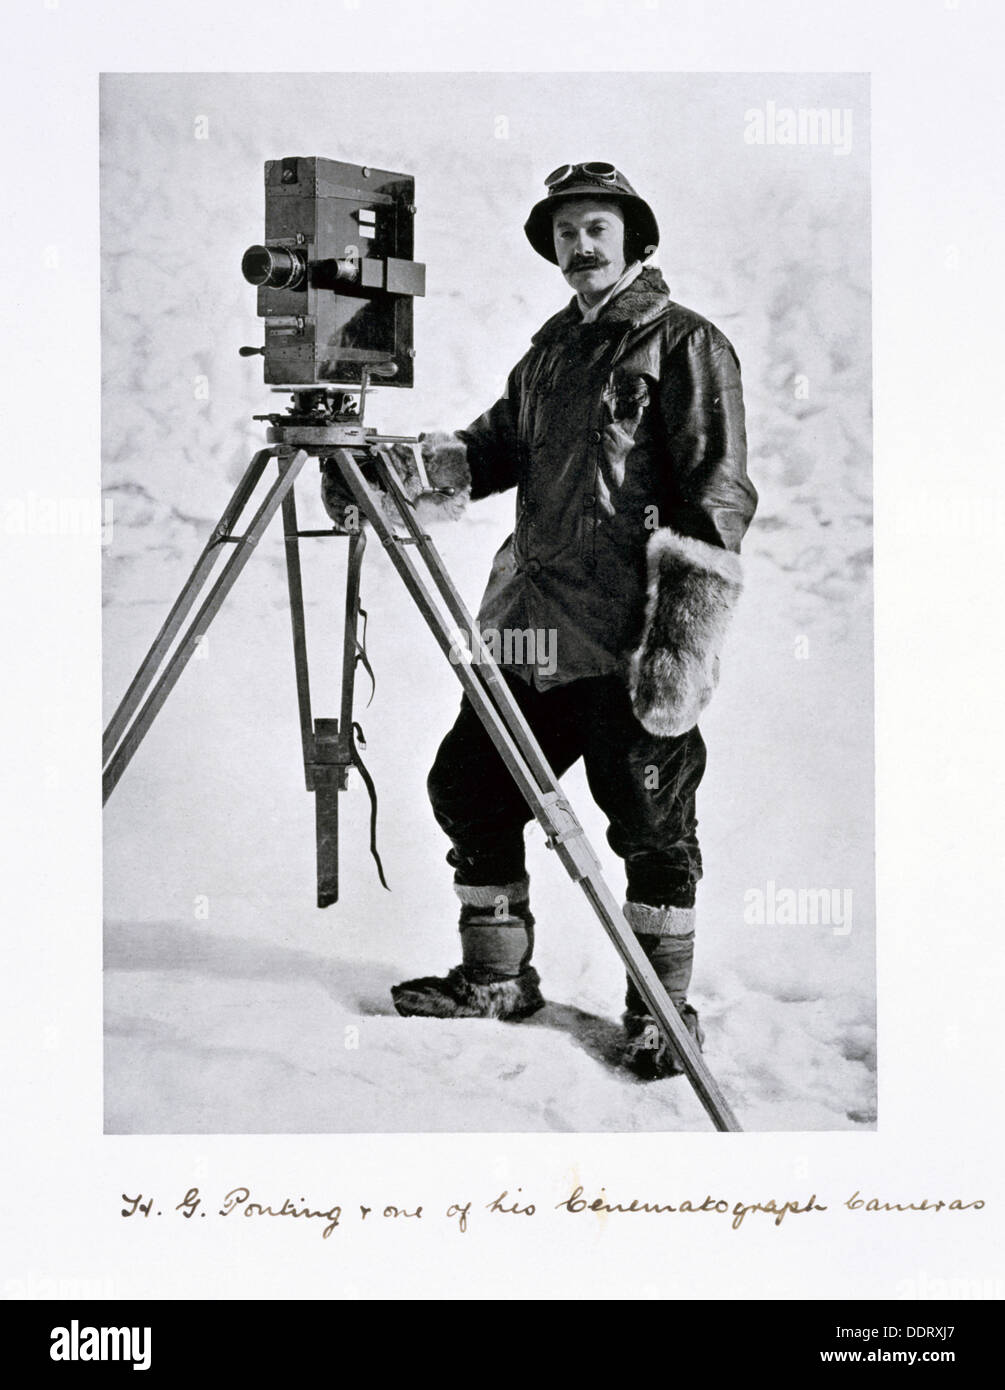 Herbert Ponting, fotografa britannica, nell'Antartico, 1910-1912. Artista: sconosciuto Foto Stock